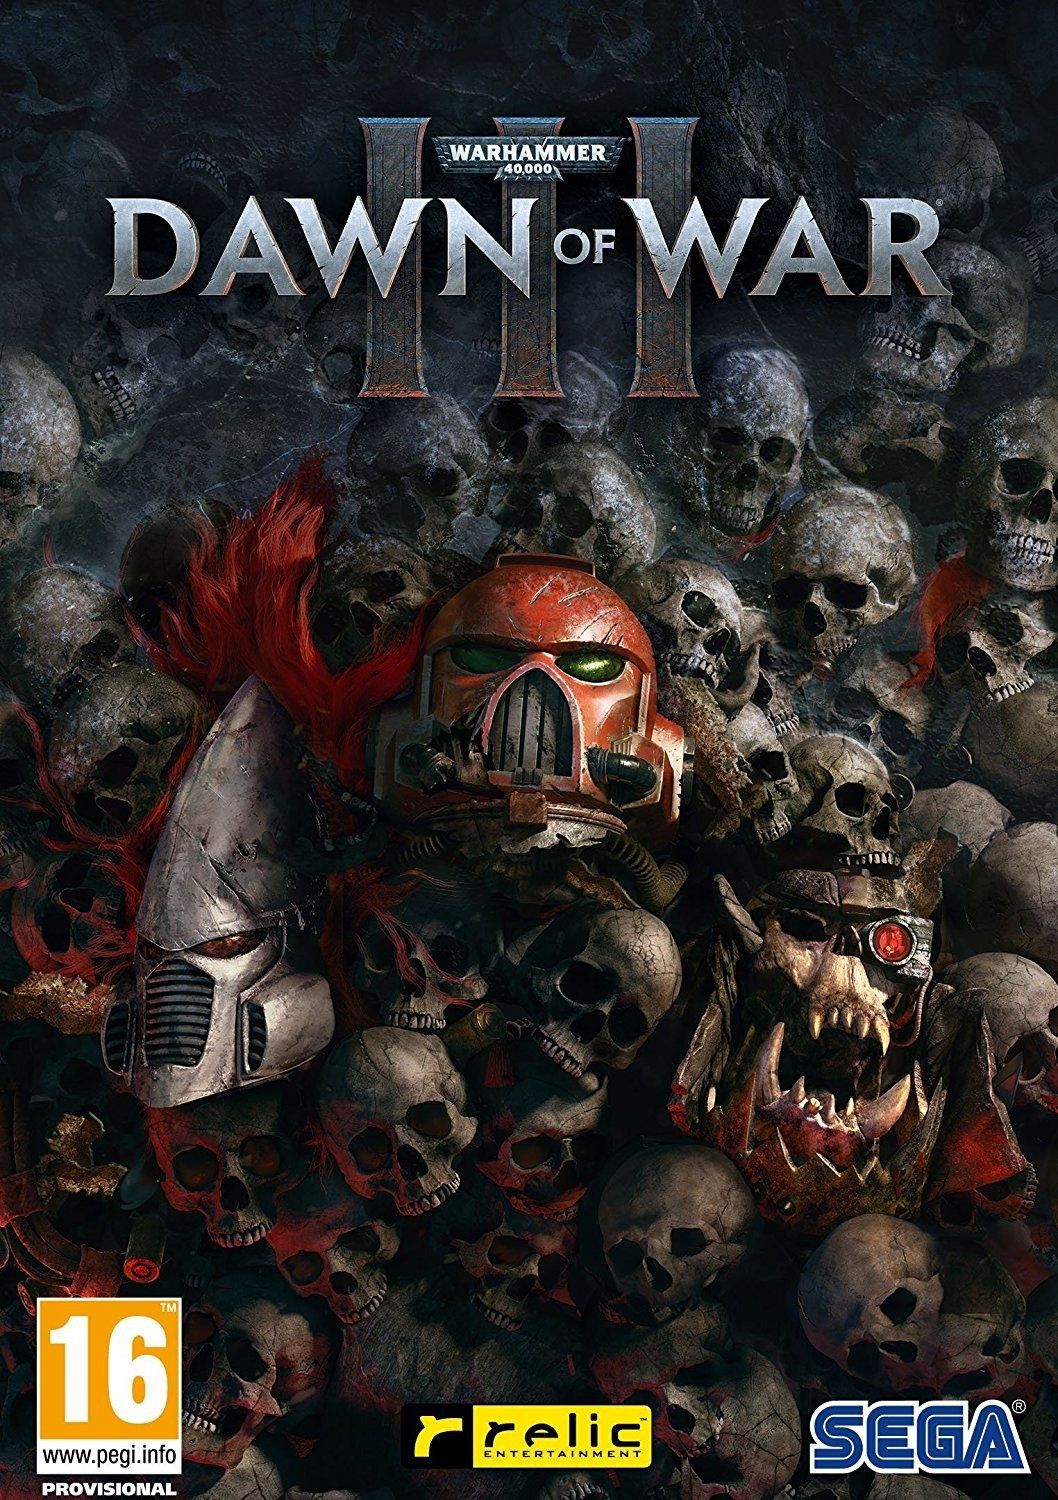 dawn of war iii steam download free